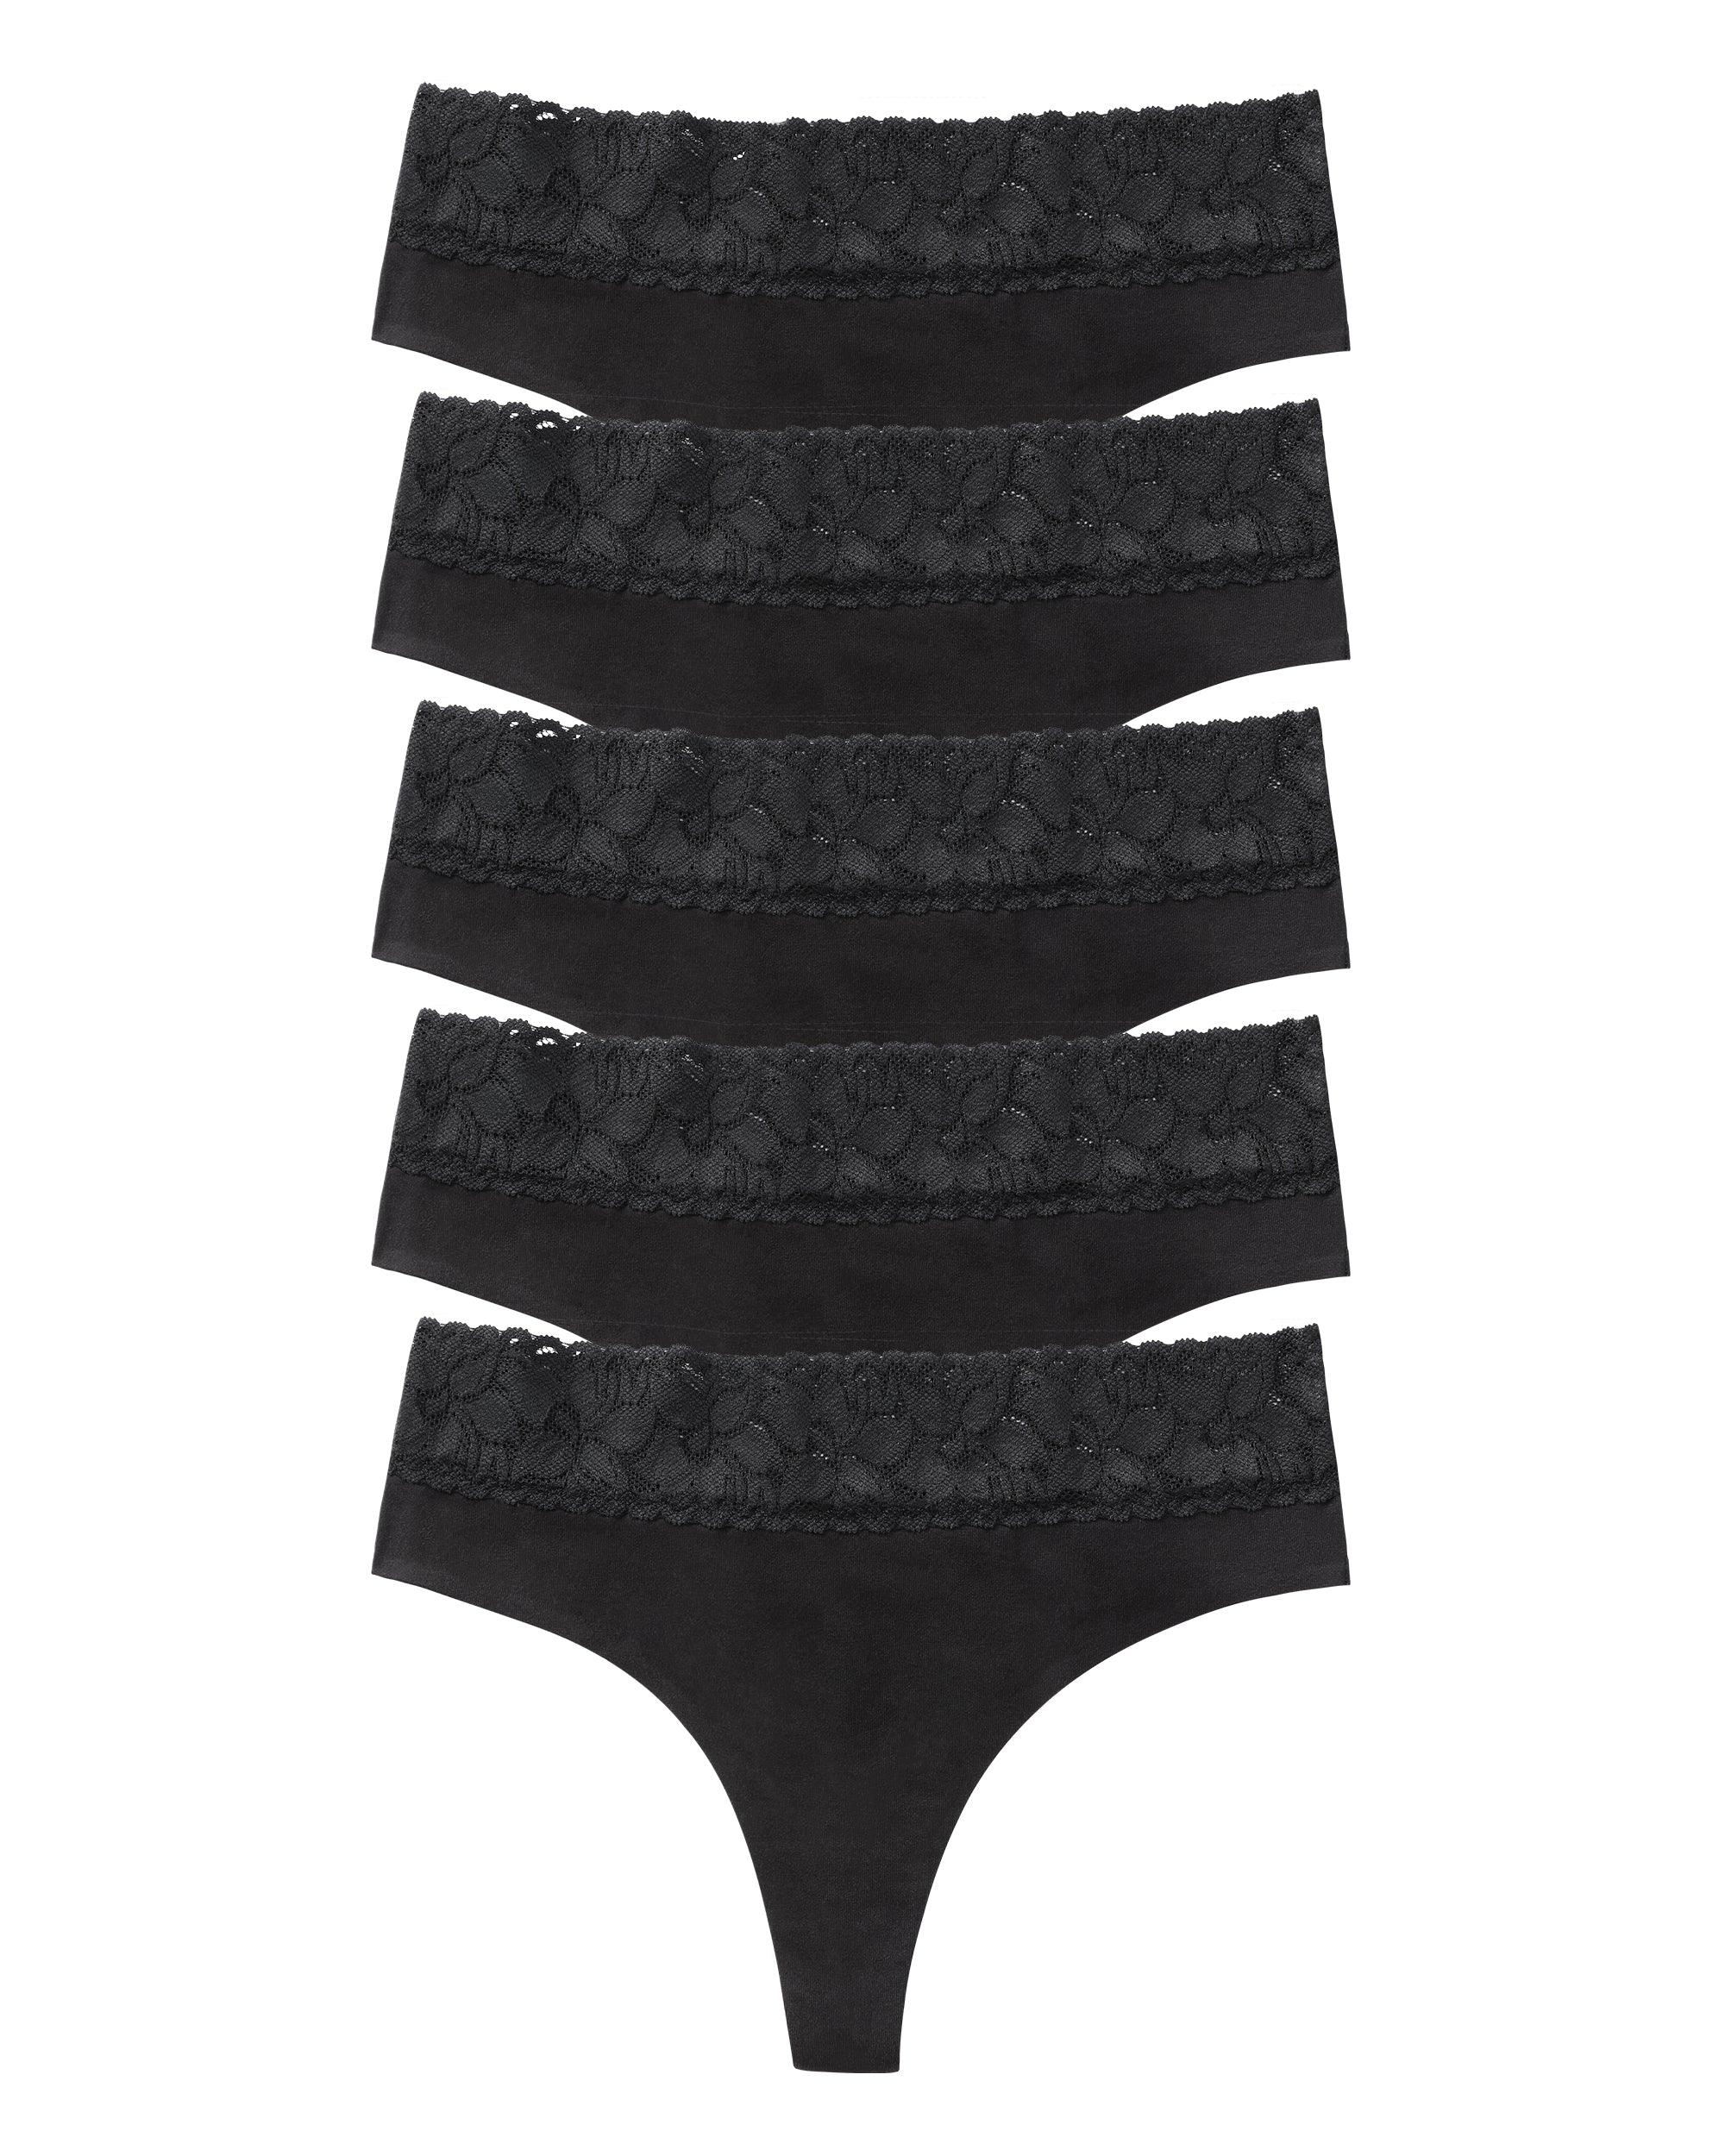 Areke Womens Seamless Thongs Underwear, 6 Pack Nylon Spandex